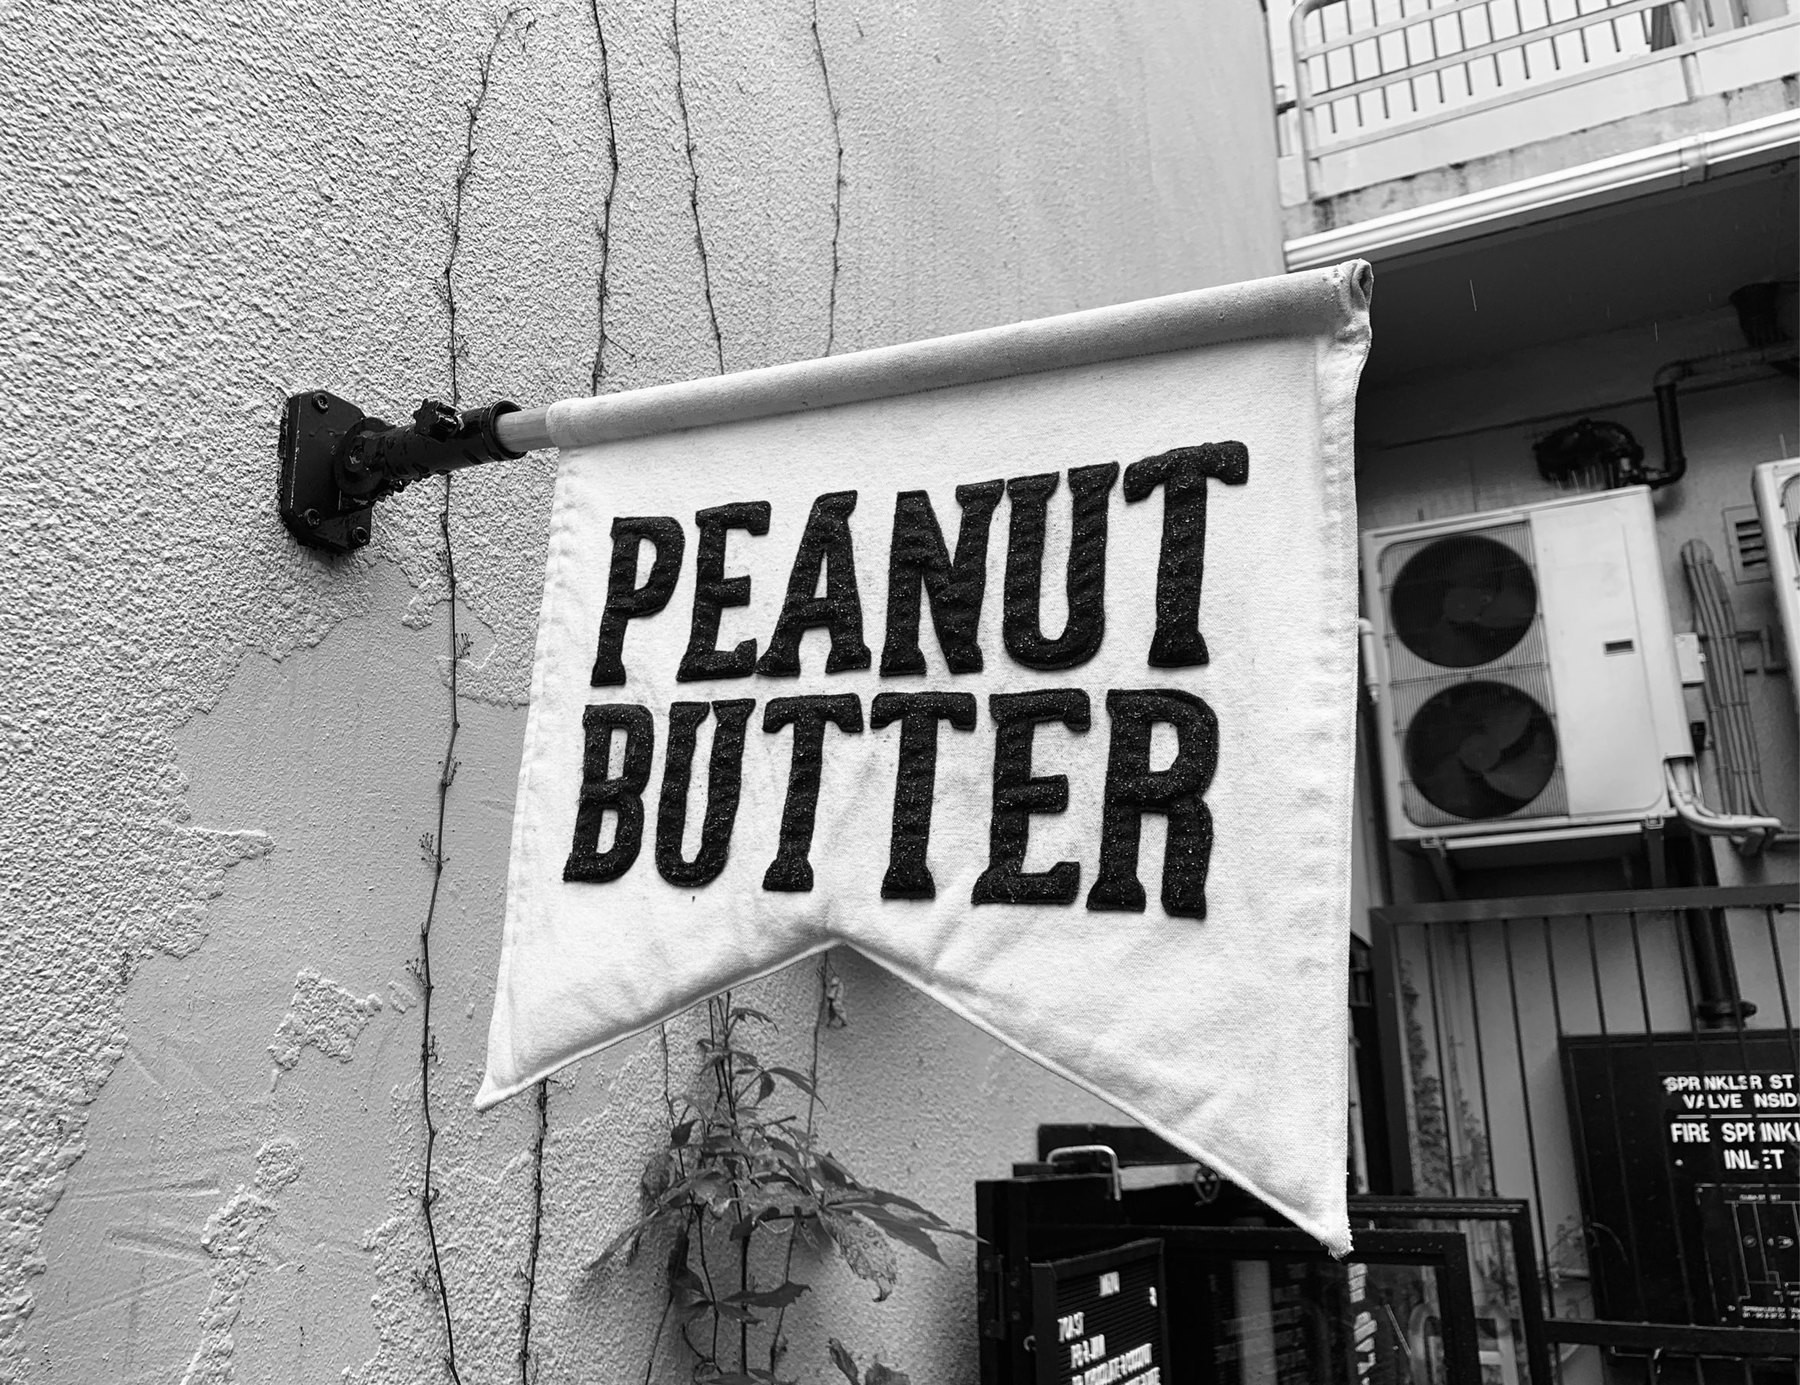 Wellington's famed Fix and Fogg peanut butter 